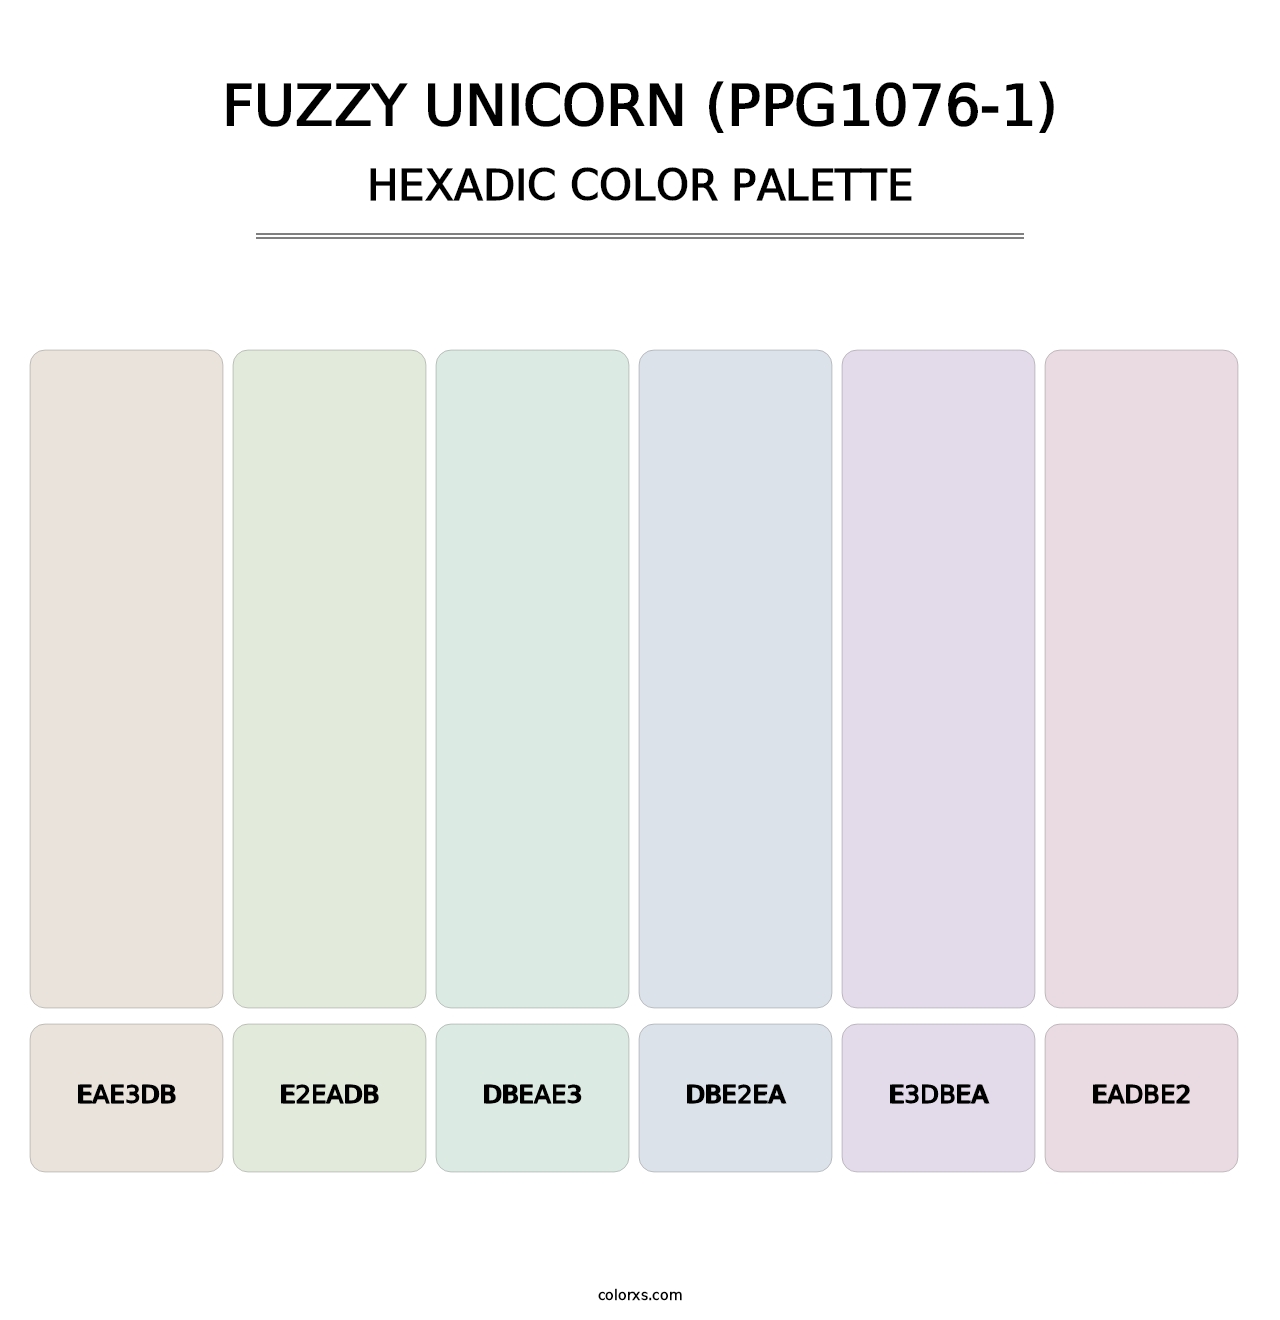 Fuzzy Unicorn (PPG1076-1) - Hexadic Color Palette